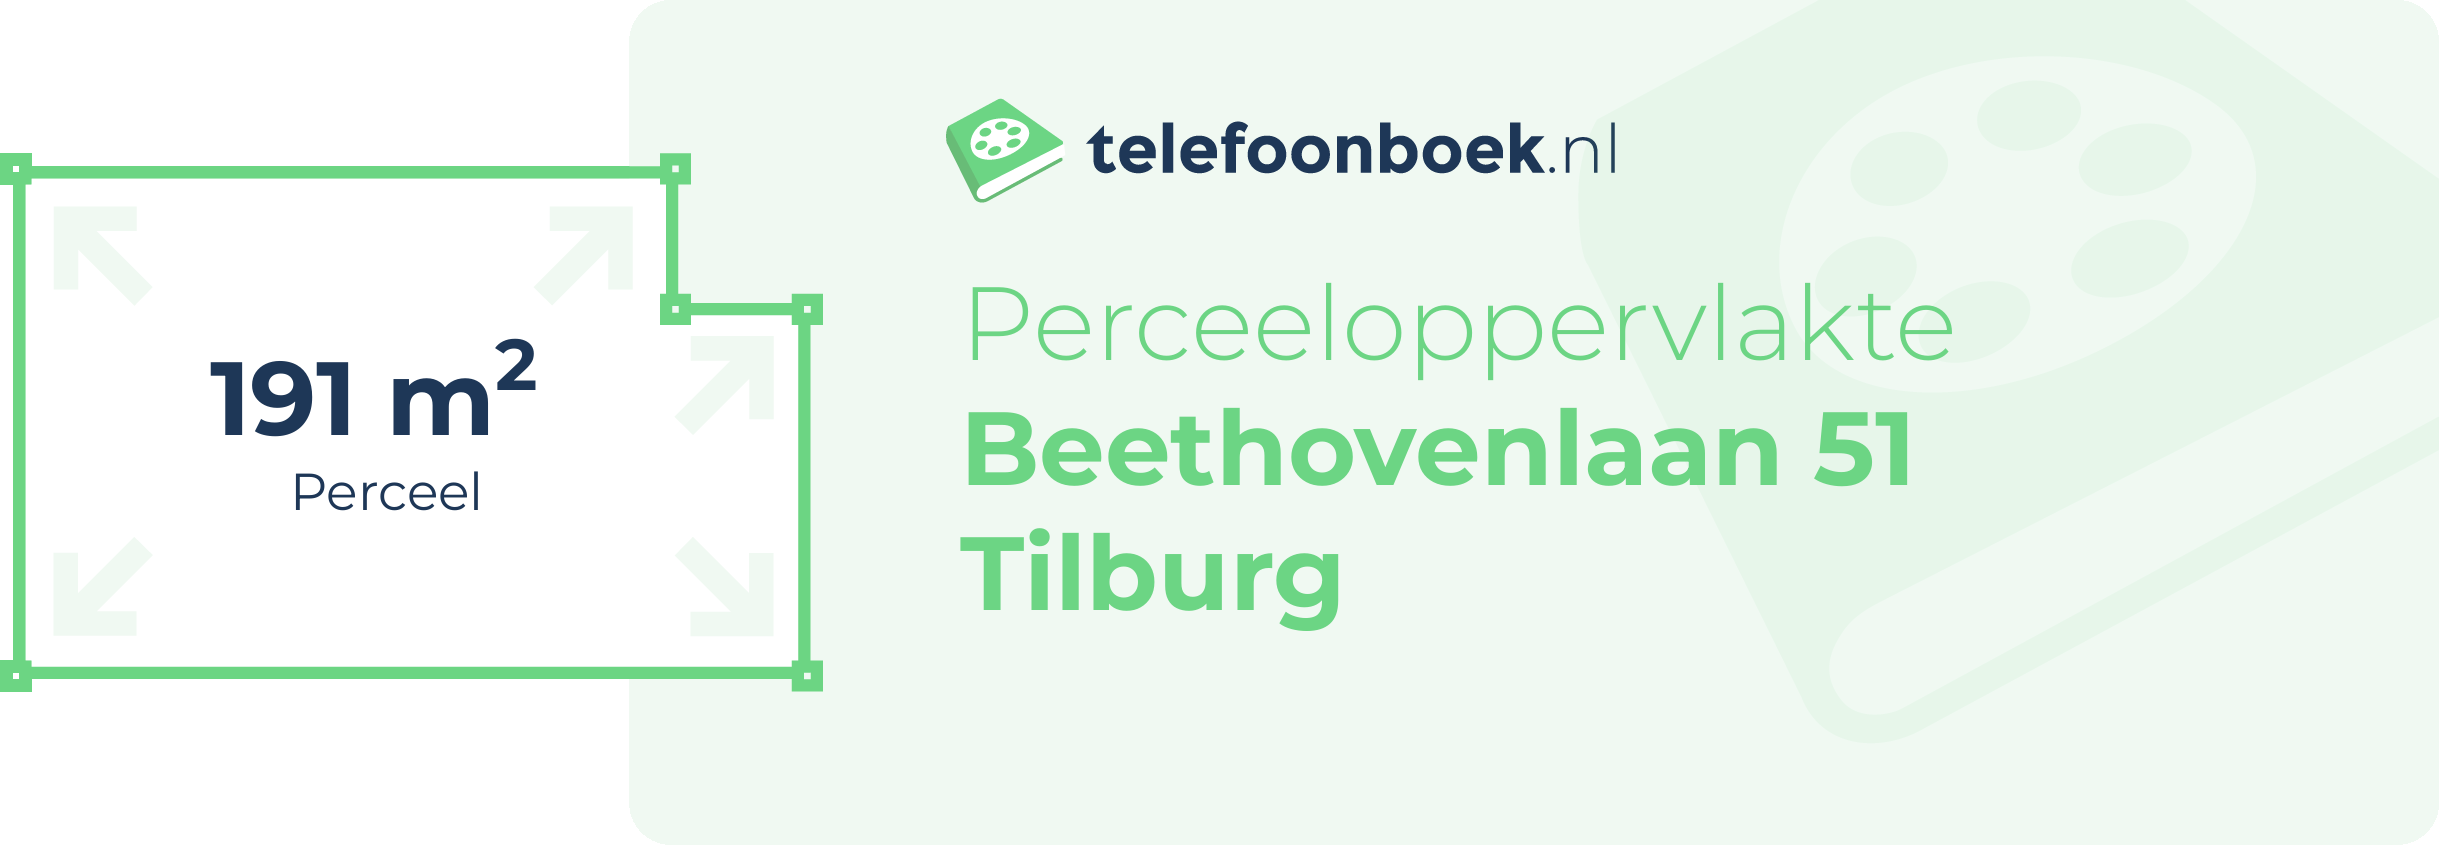 Perceeloppervlakte Beethovenlaan 51 Tilburg